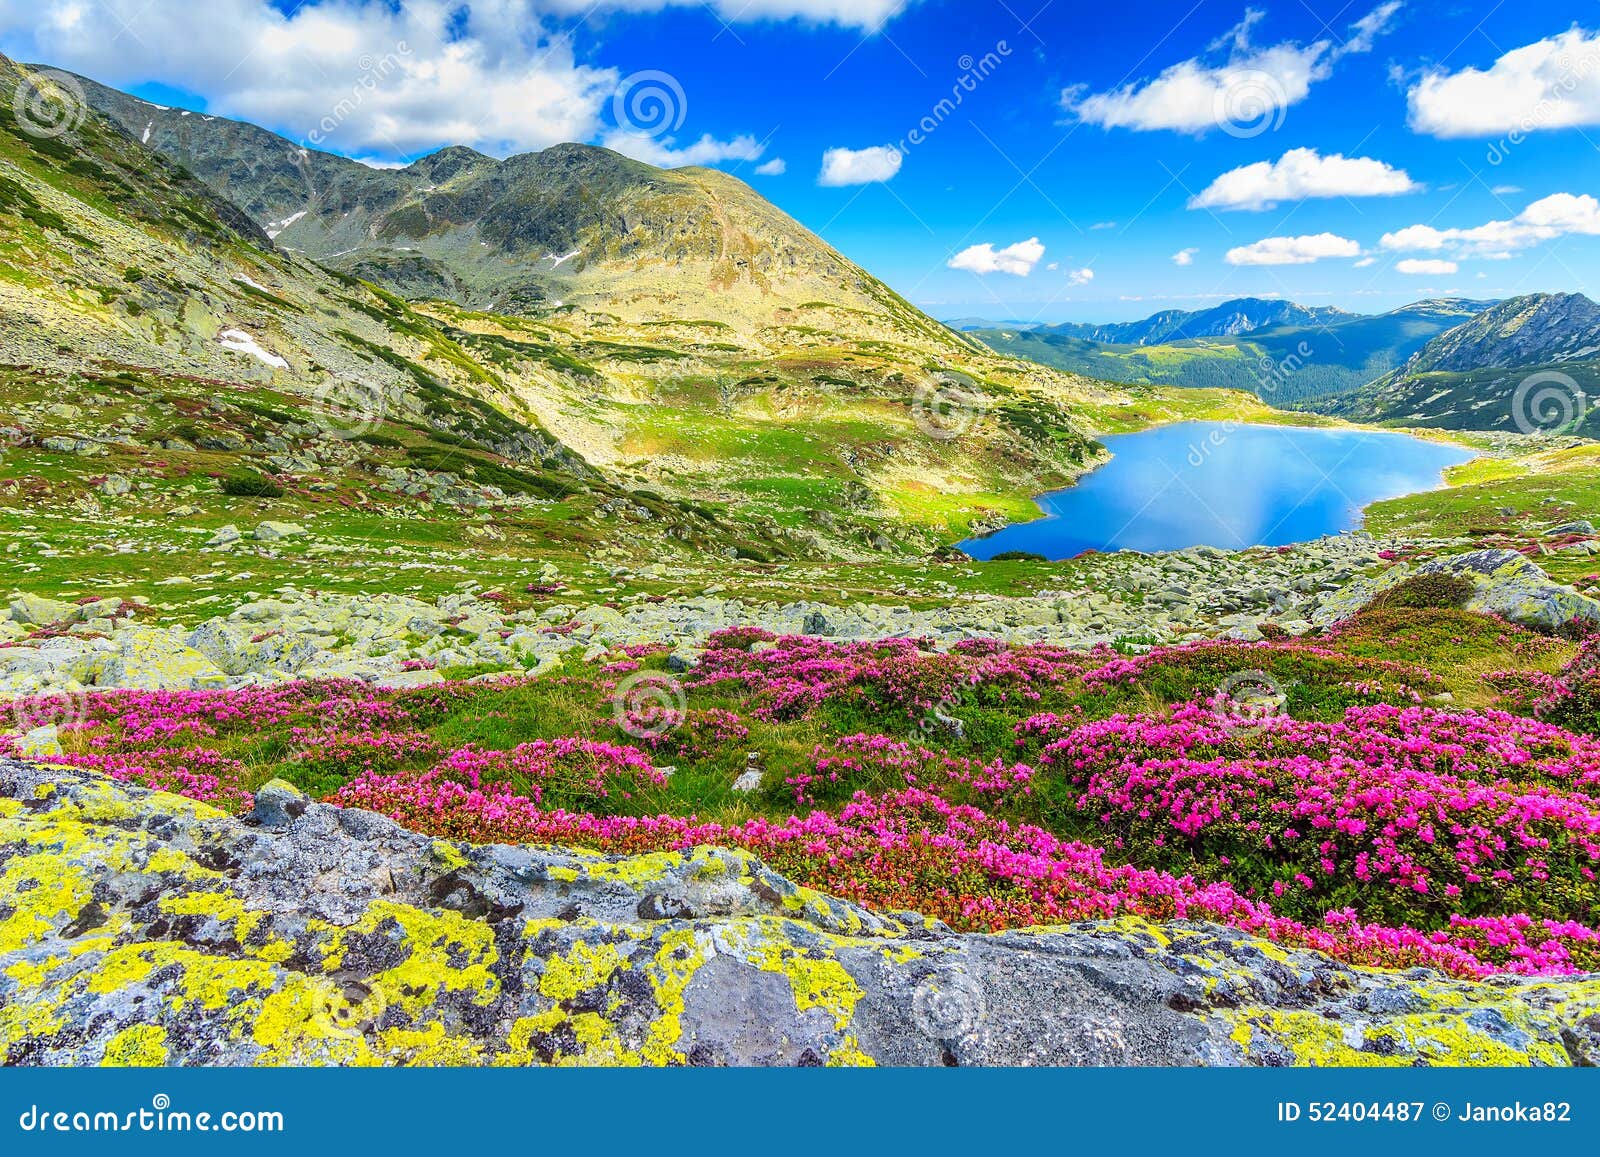 magical rhododendron flowers and bucura mountain lakes,retezat mountains,romania